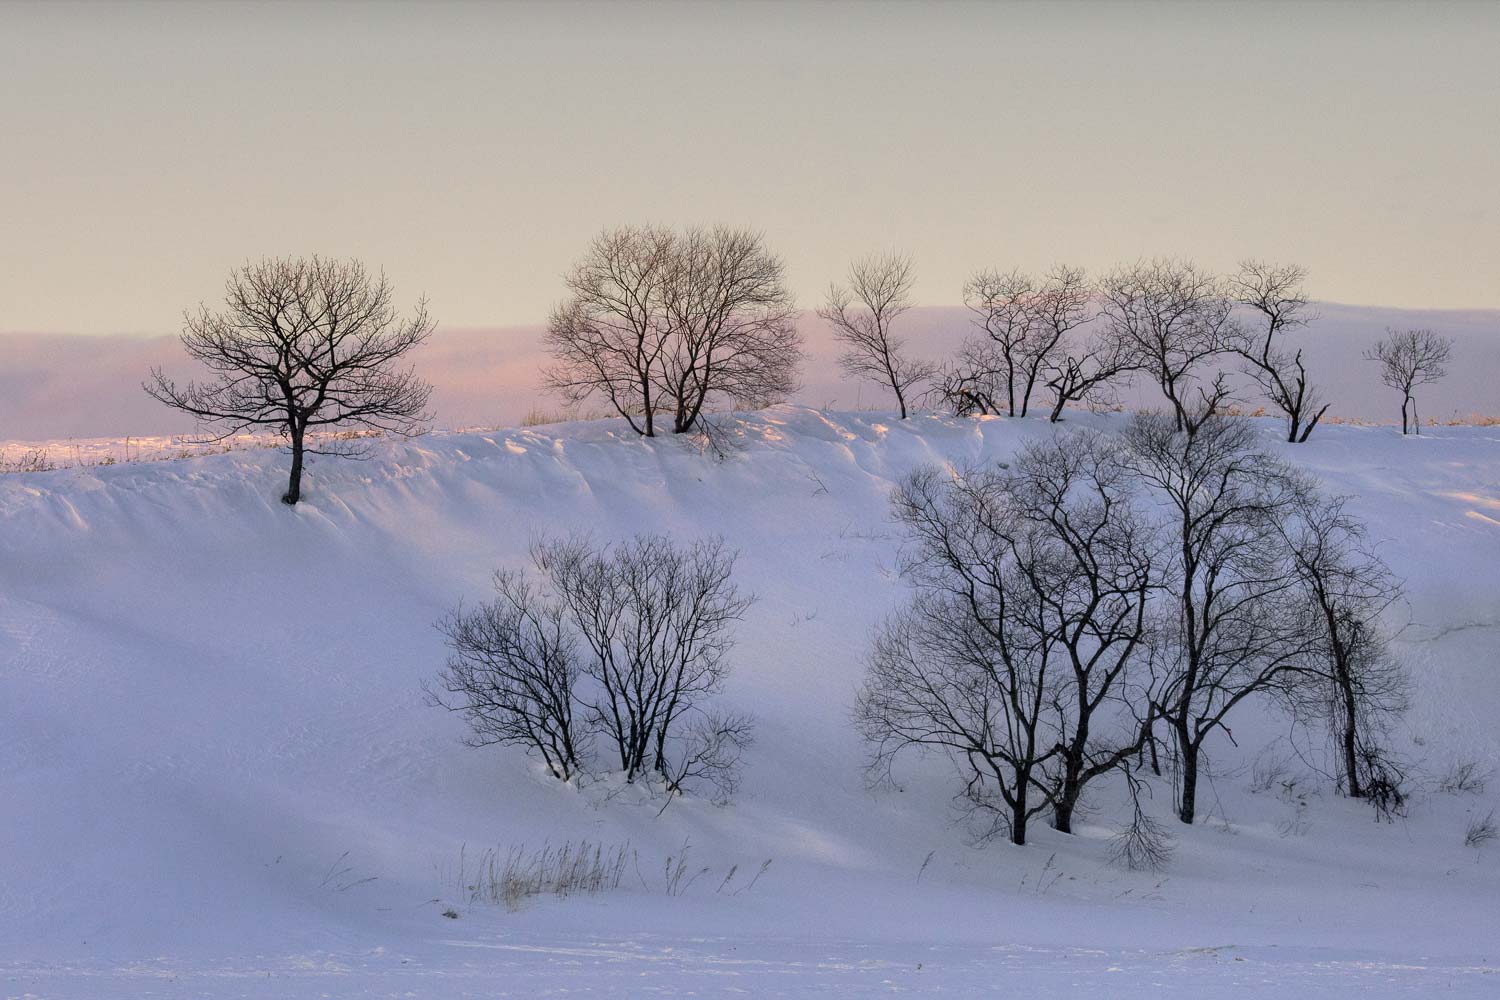 Hokkaido in winter